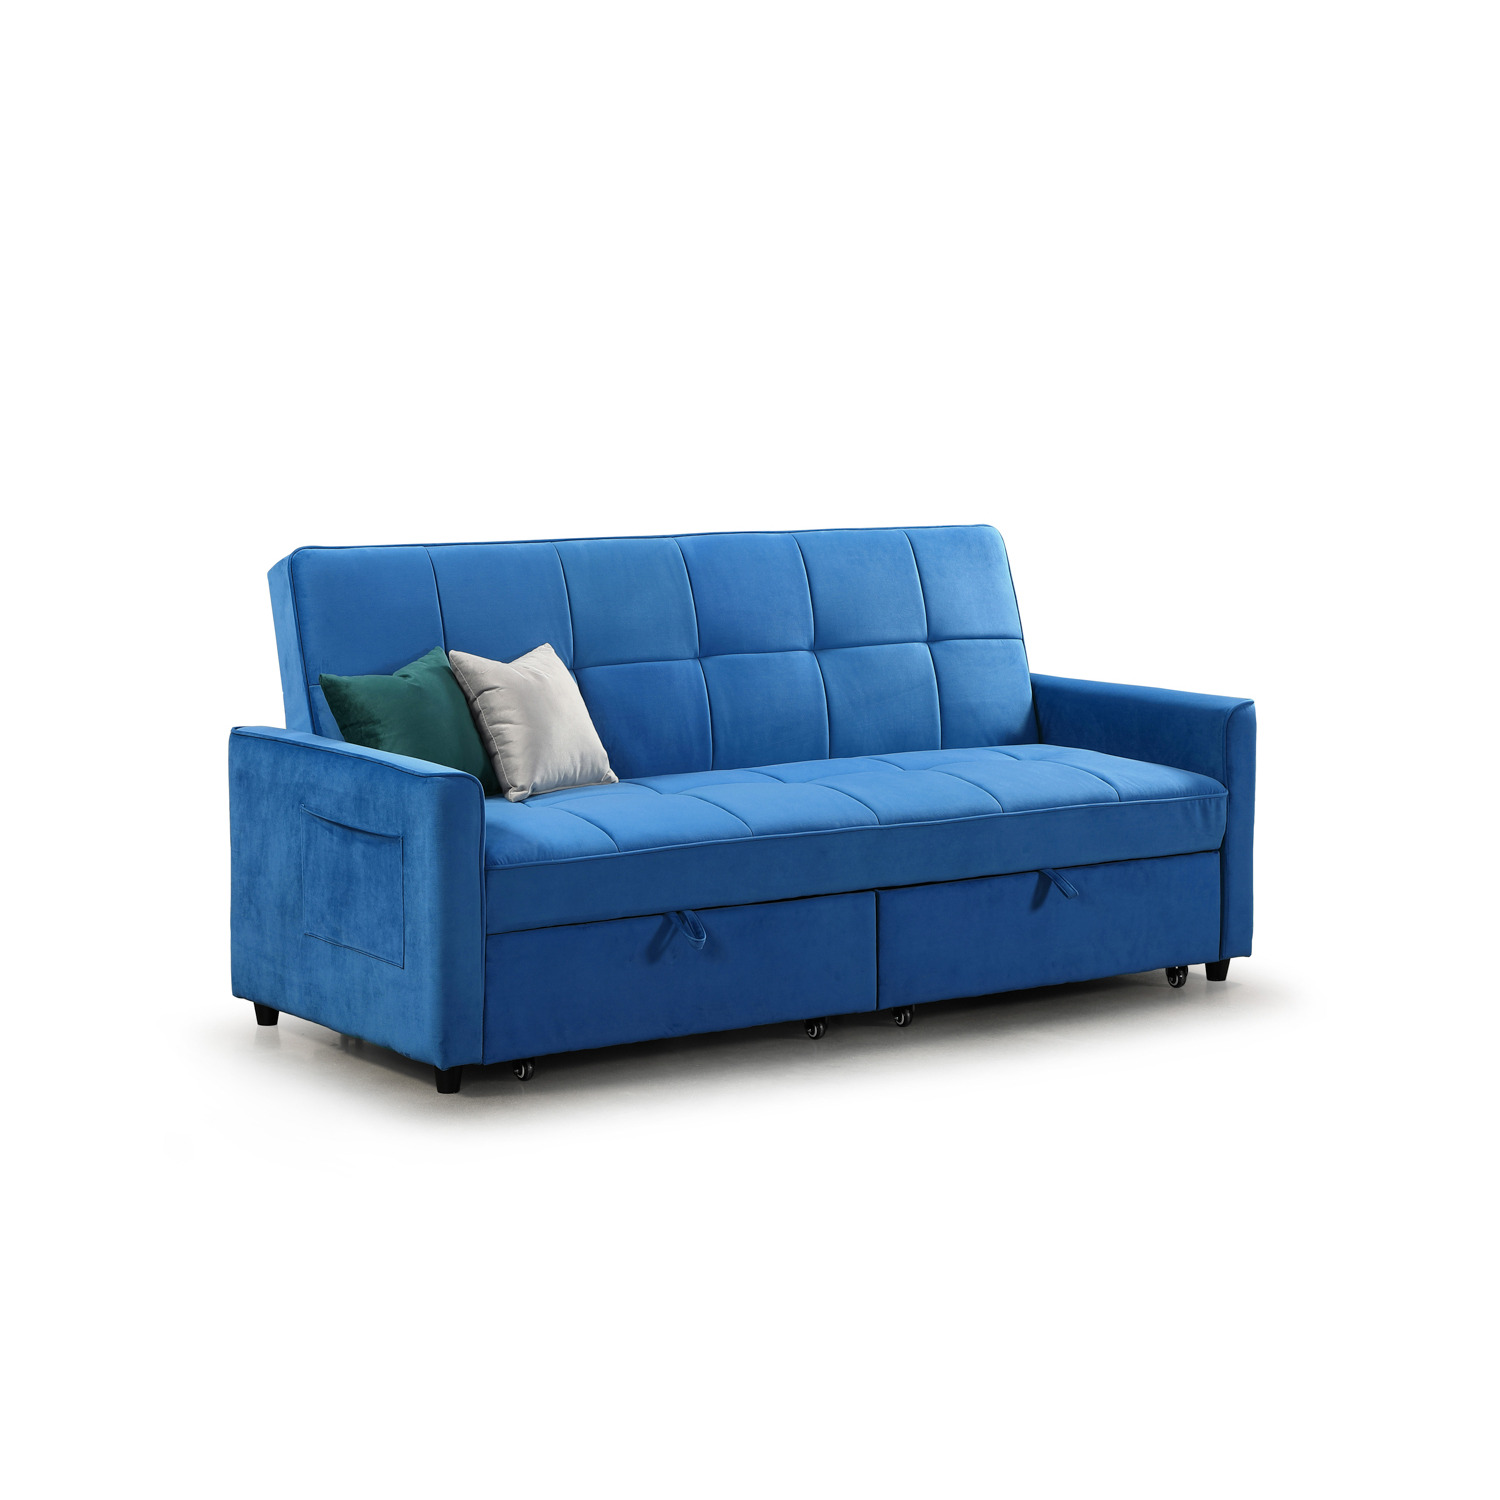 Elegance Sofabed Plush Blue 3 Seater - image 1